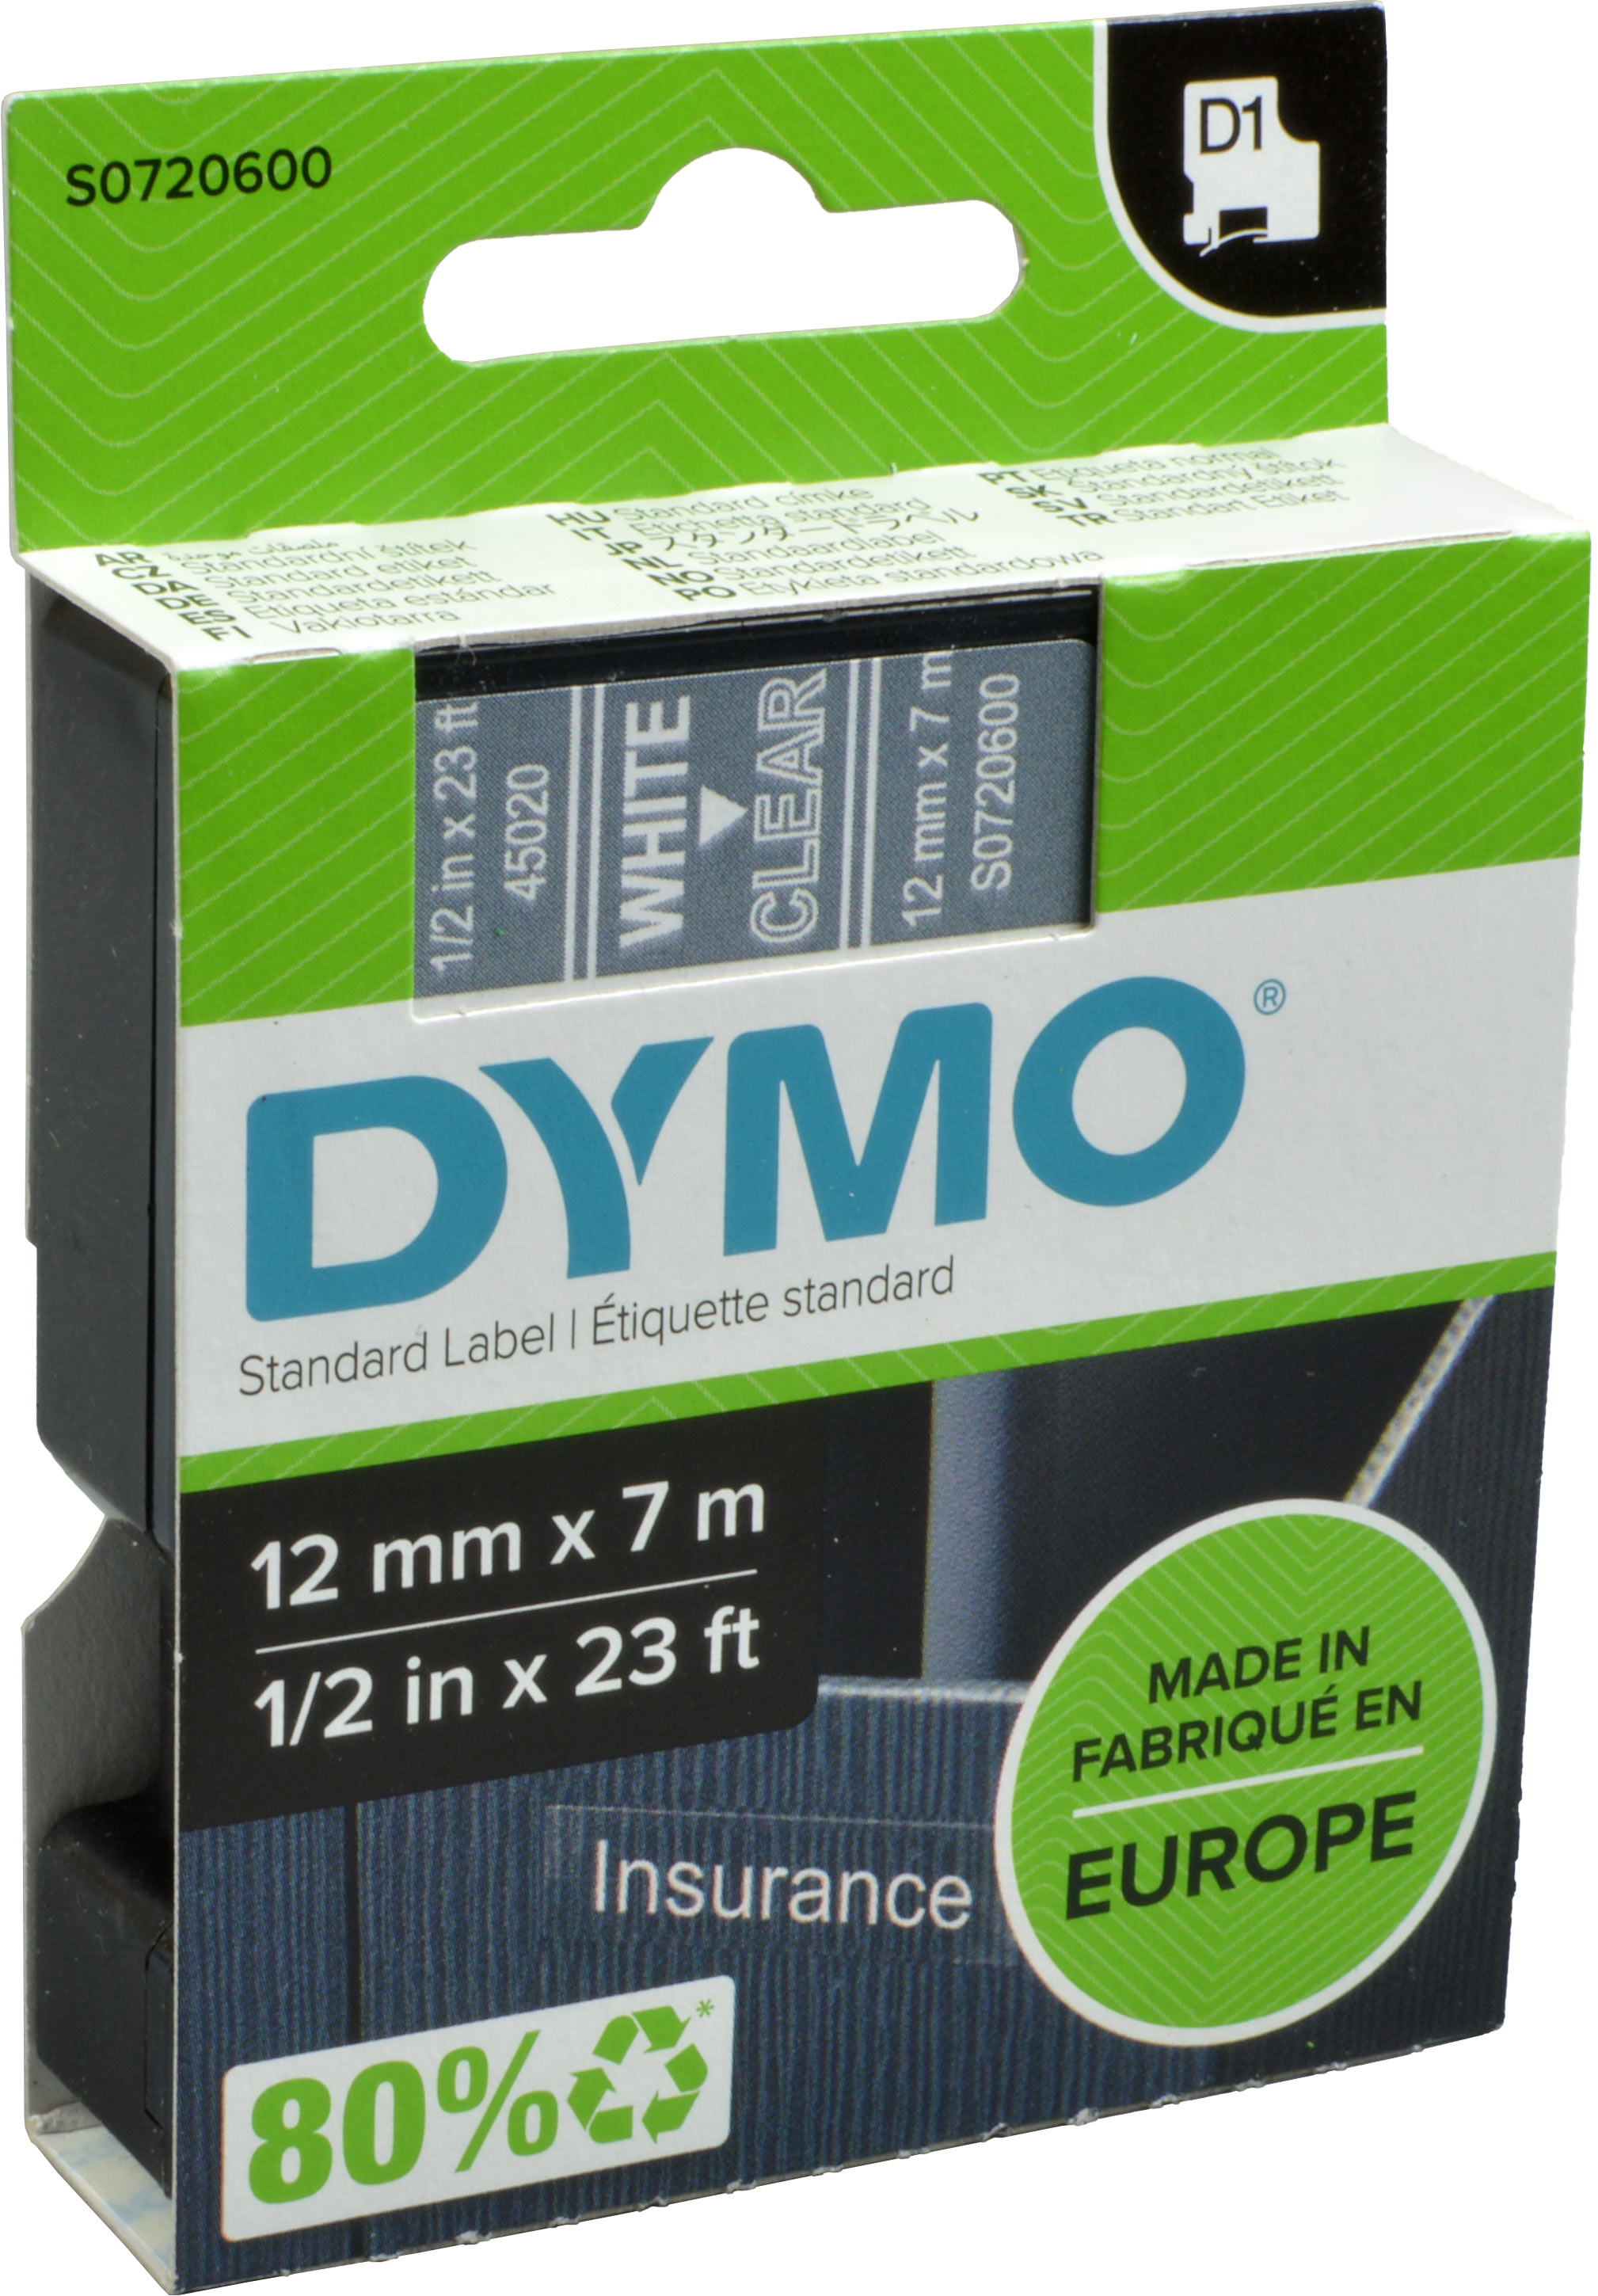 Dymo Originalband 45020  weiß auf transparent  12mm x 7m